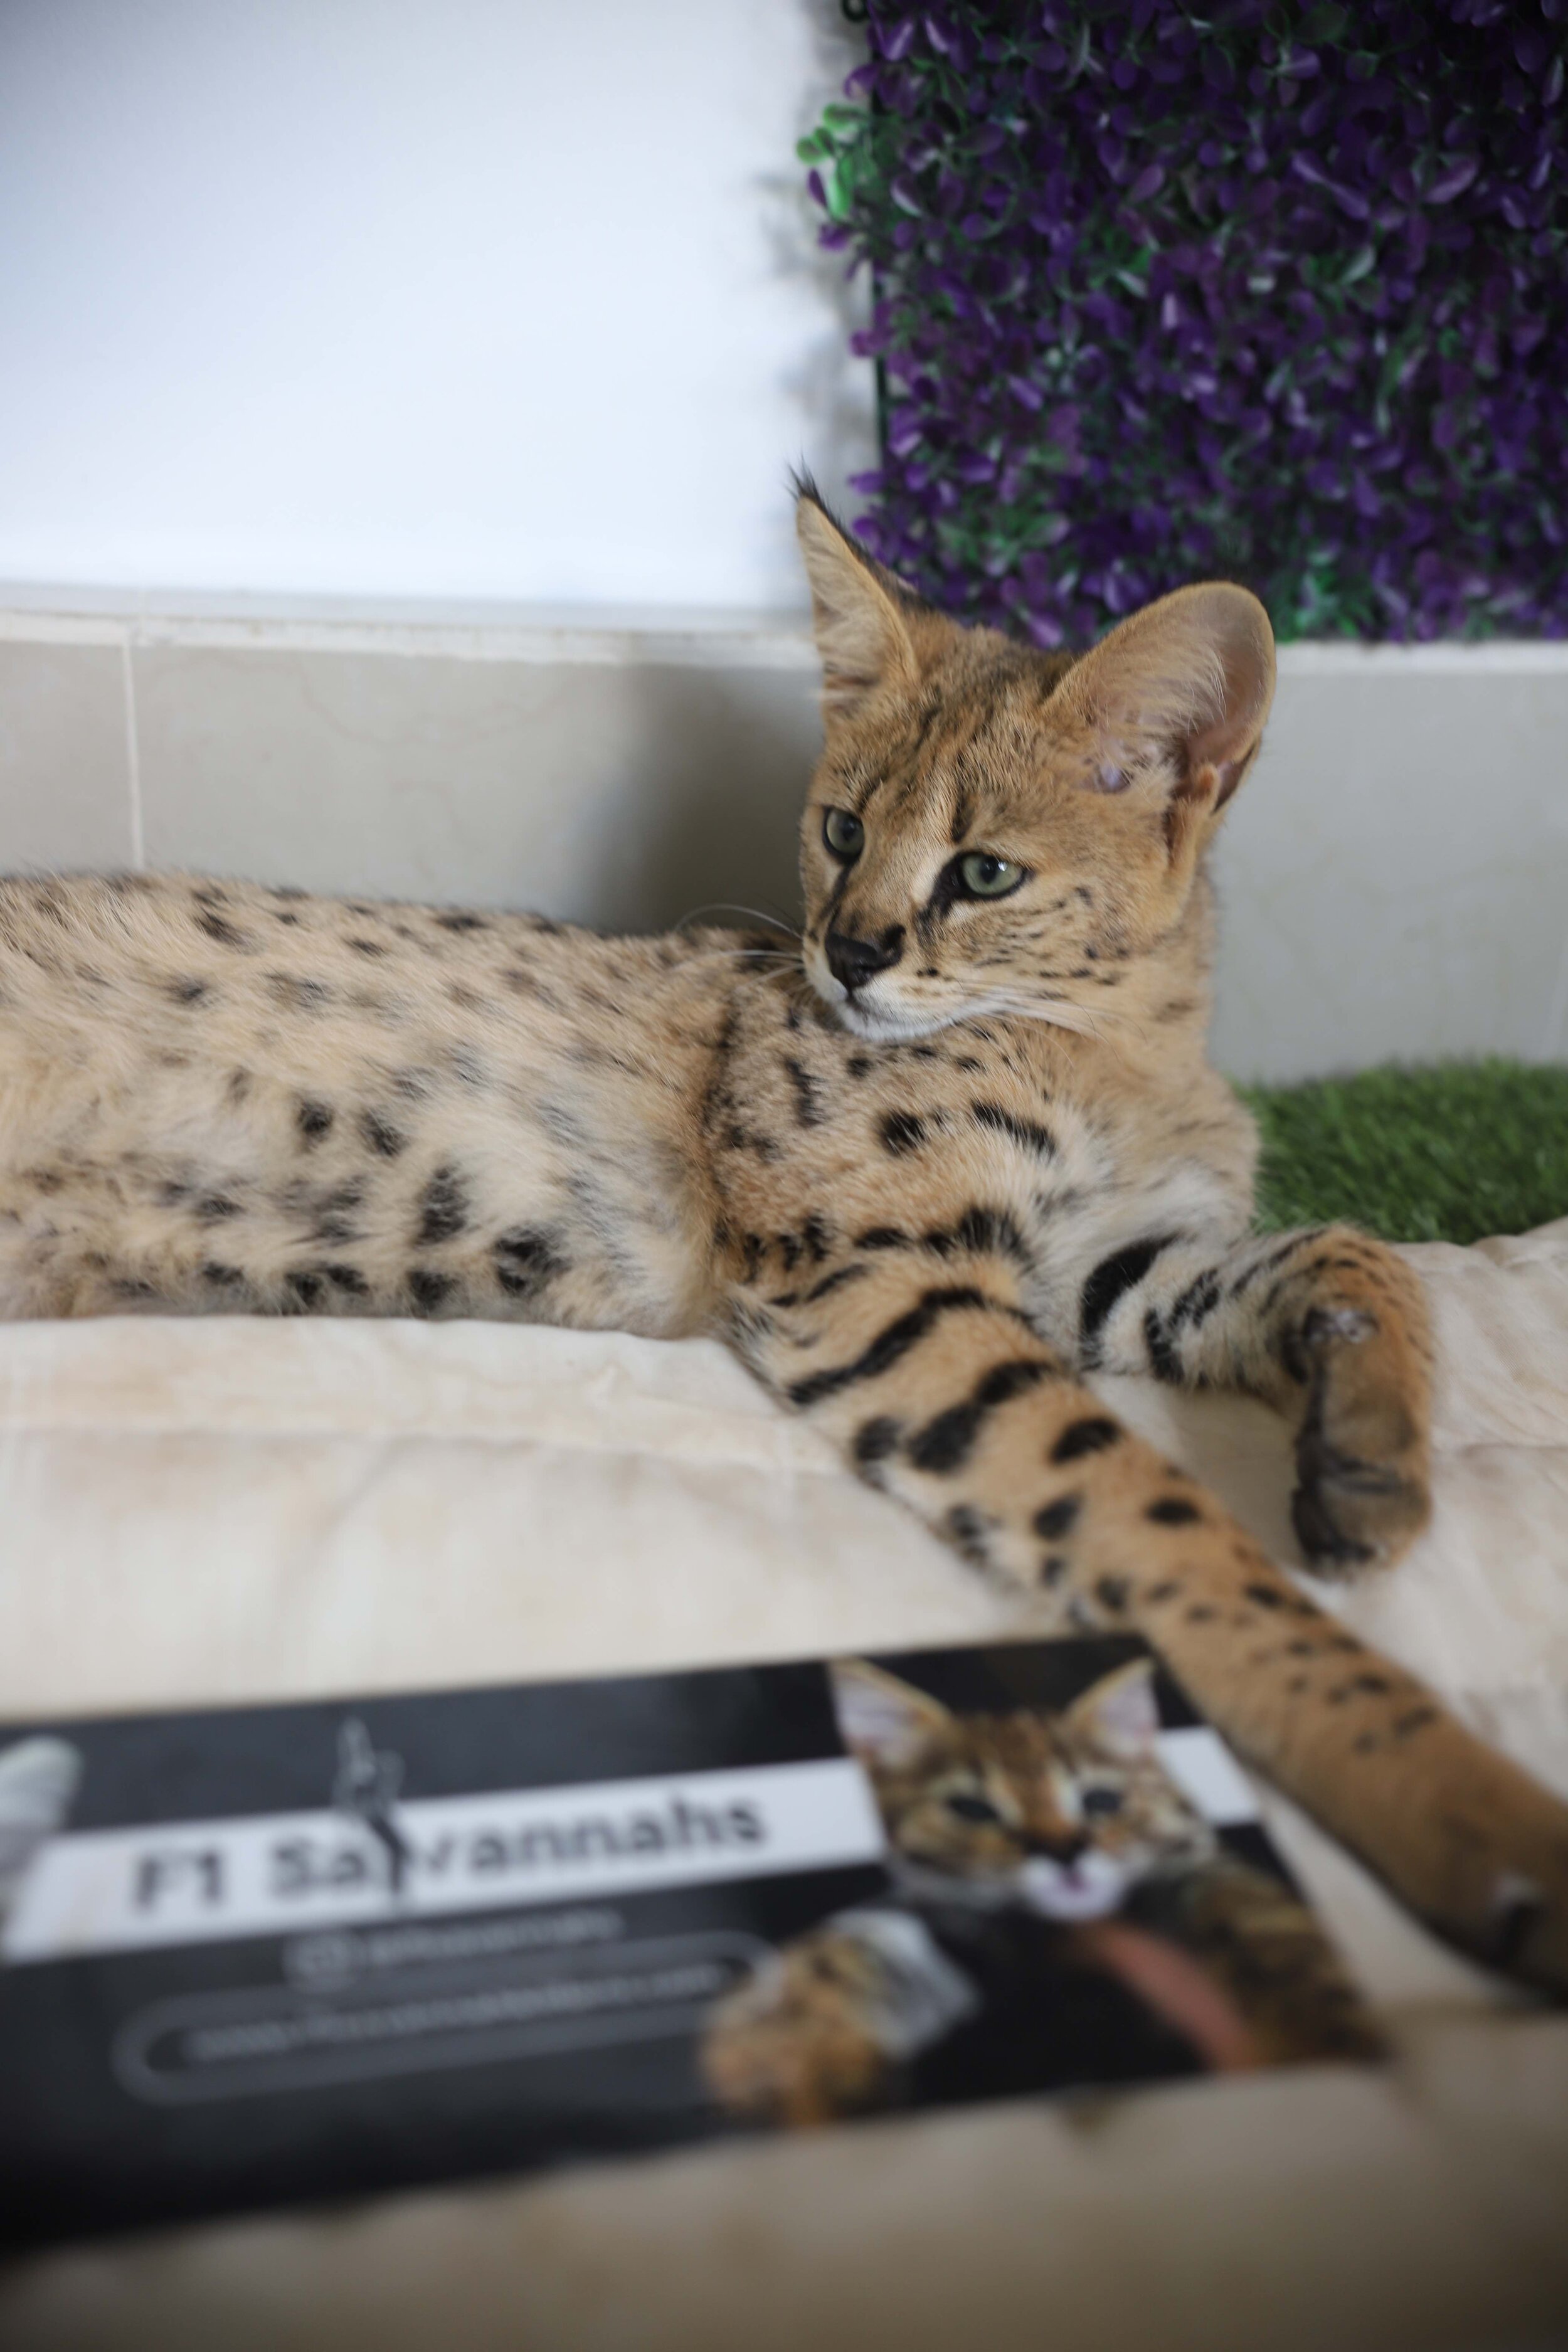 Do F1 Savannah Cats make good pets? — F1 Savannah Cat Breeder